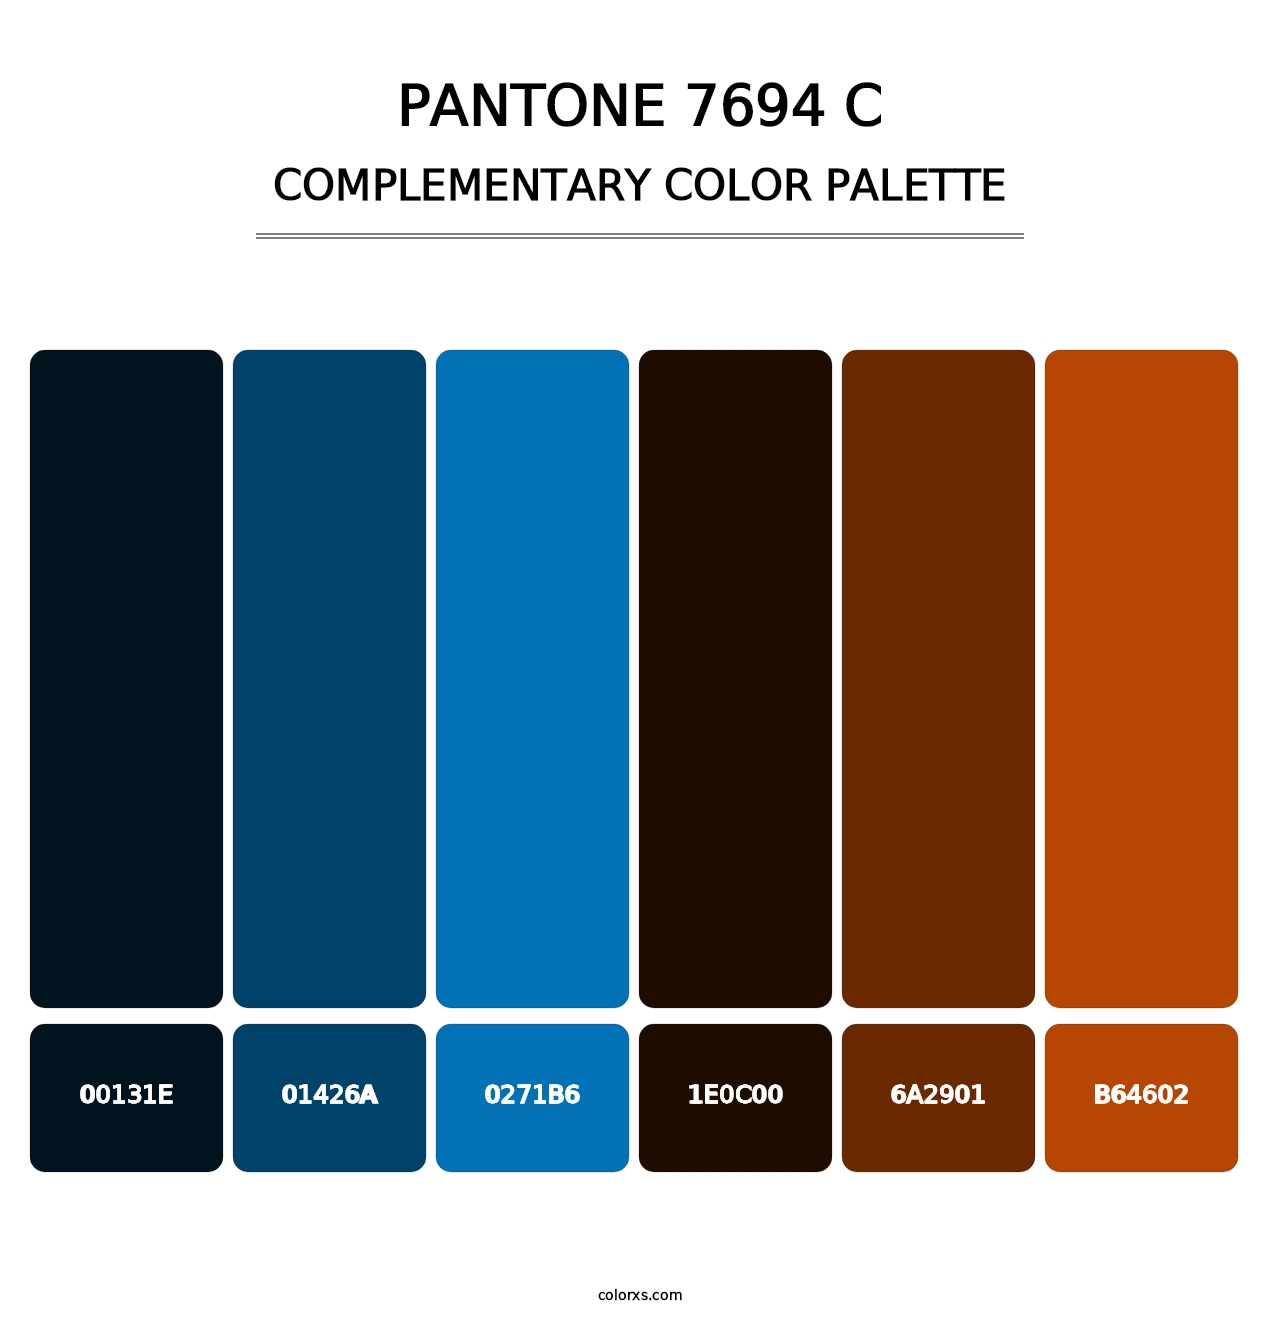 PANTONE 7694 C - Complementary Color Palette